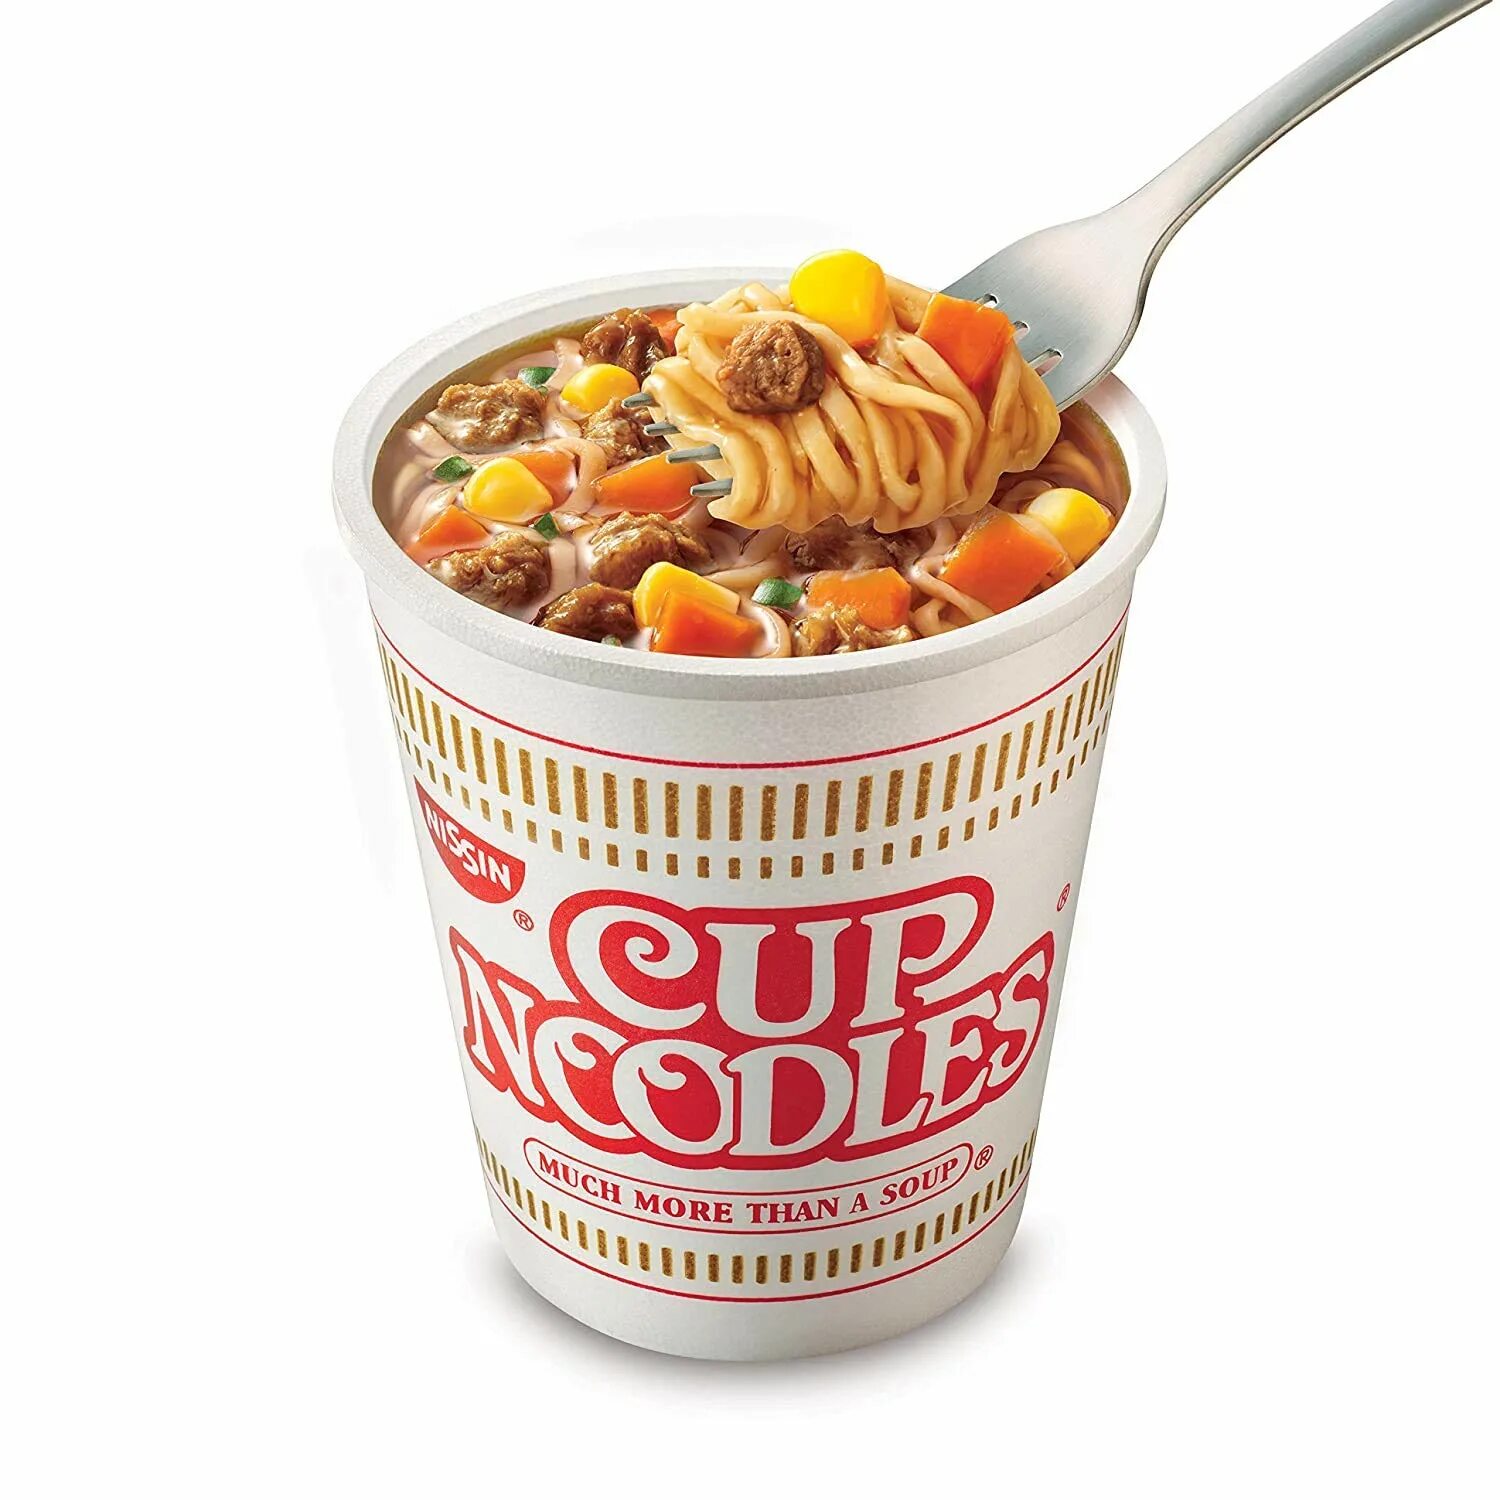 Лапша Cup Noodle. Nissin Cup Noodles. Лапша быстрого приготовления Cup Noodles. Лапша Cup Noodles 90е. Лапша быстрого приготовления в пост